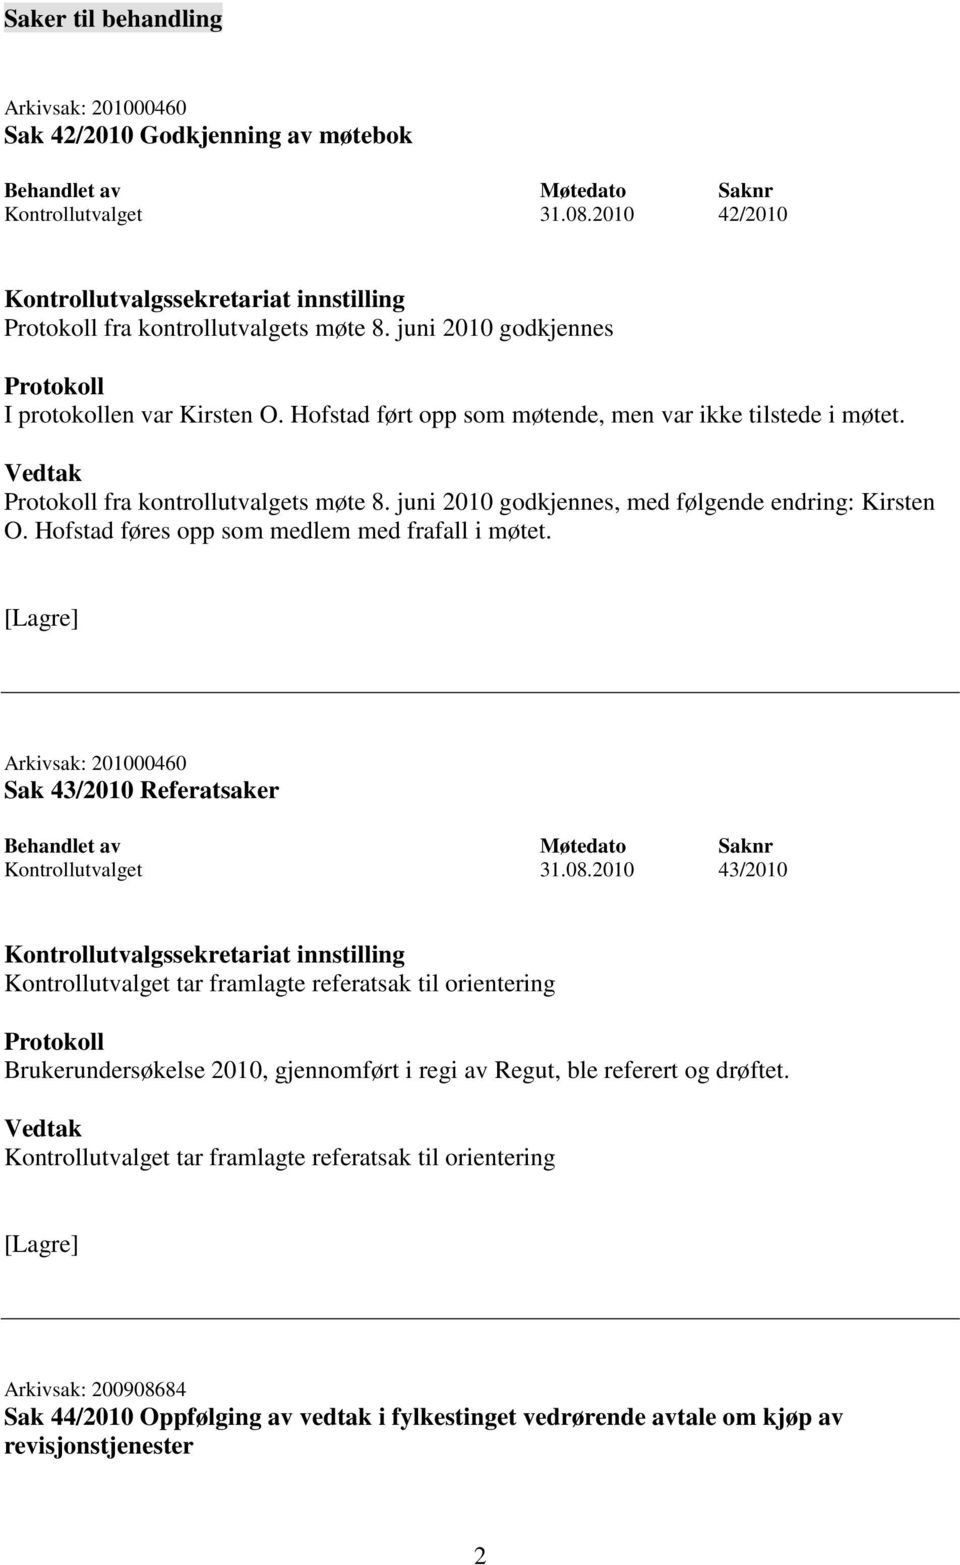 Arkivsak: 201000460 Sak 43/2010 Referatsaker Kontrollutvalget 31.08.